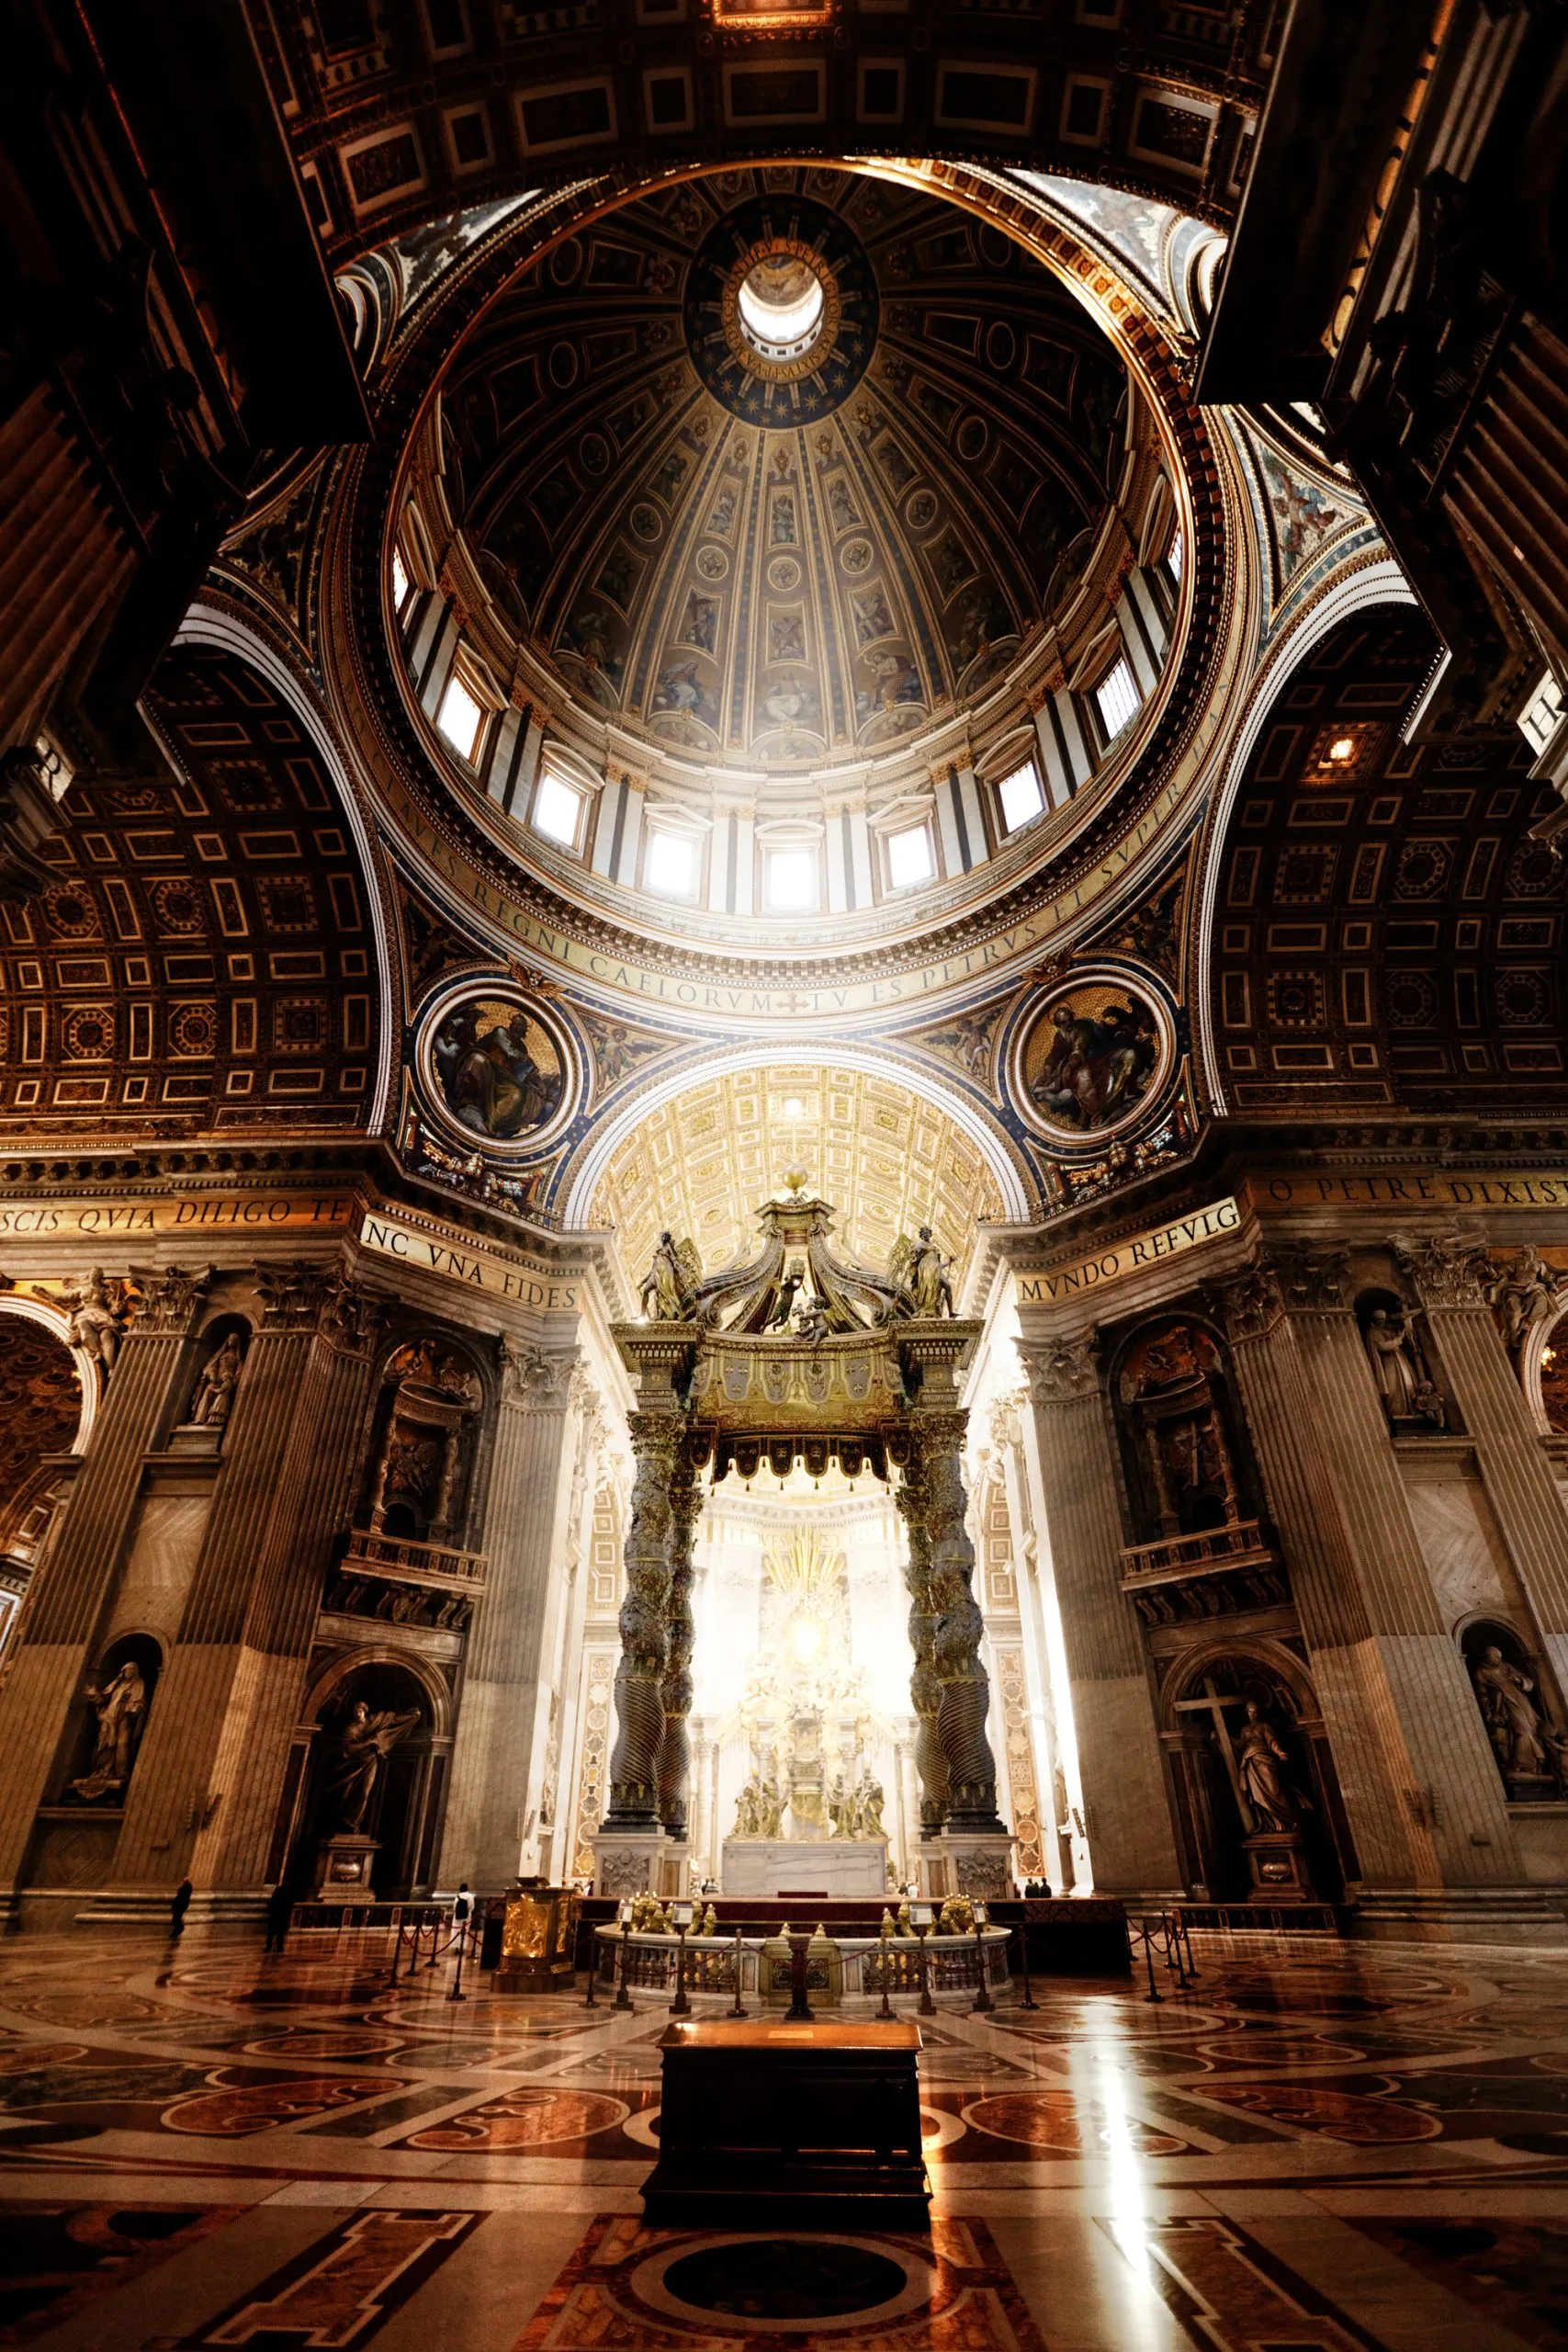 Inside the St. Peter Basilica, Vatican